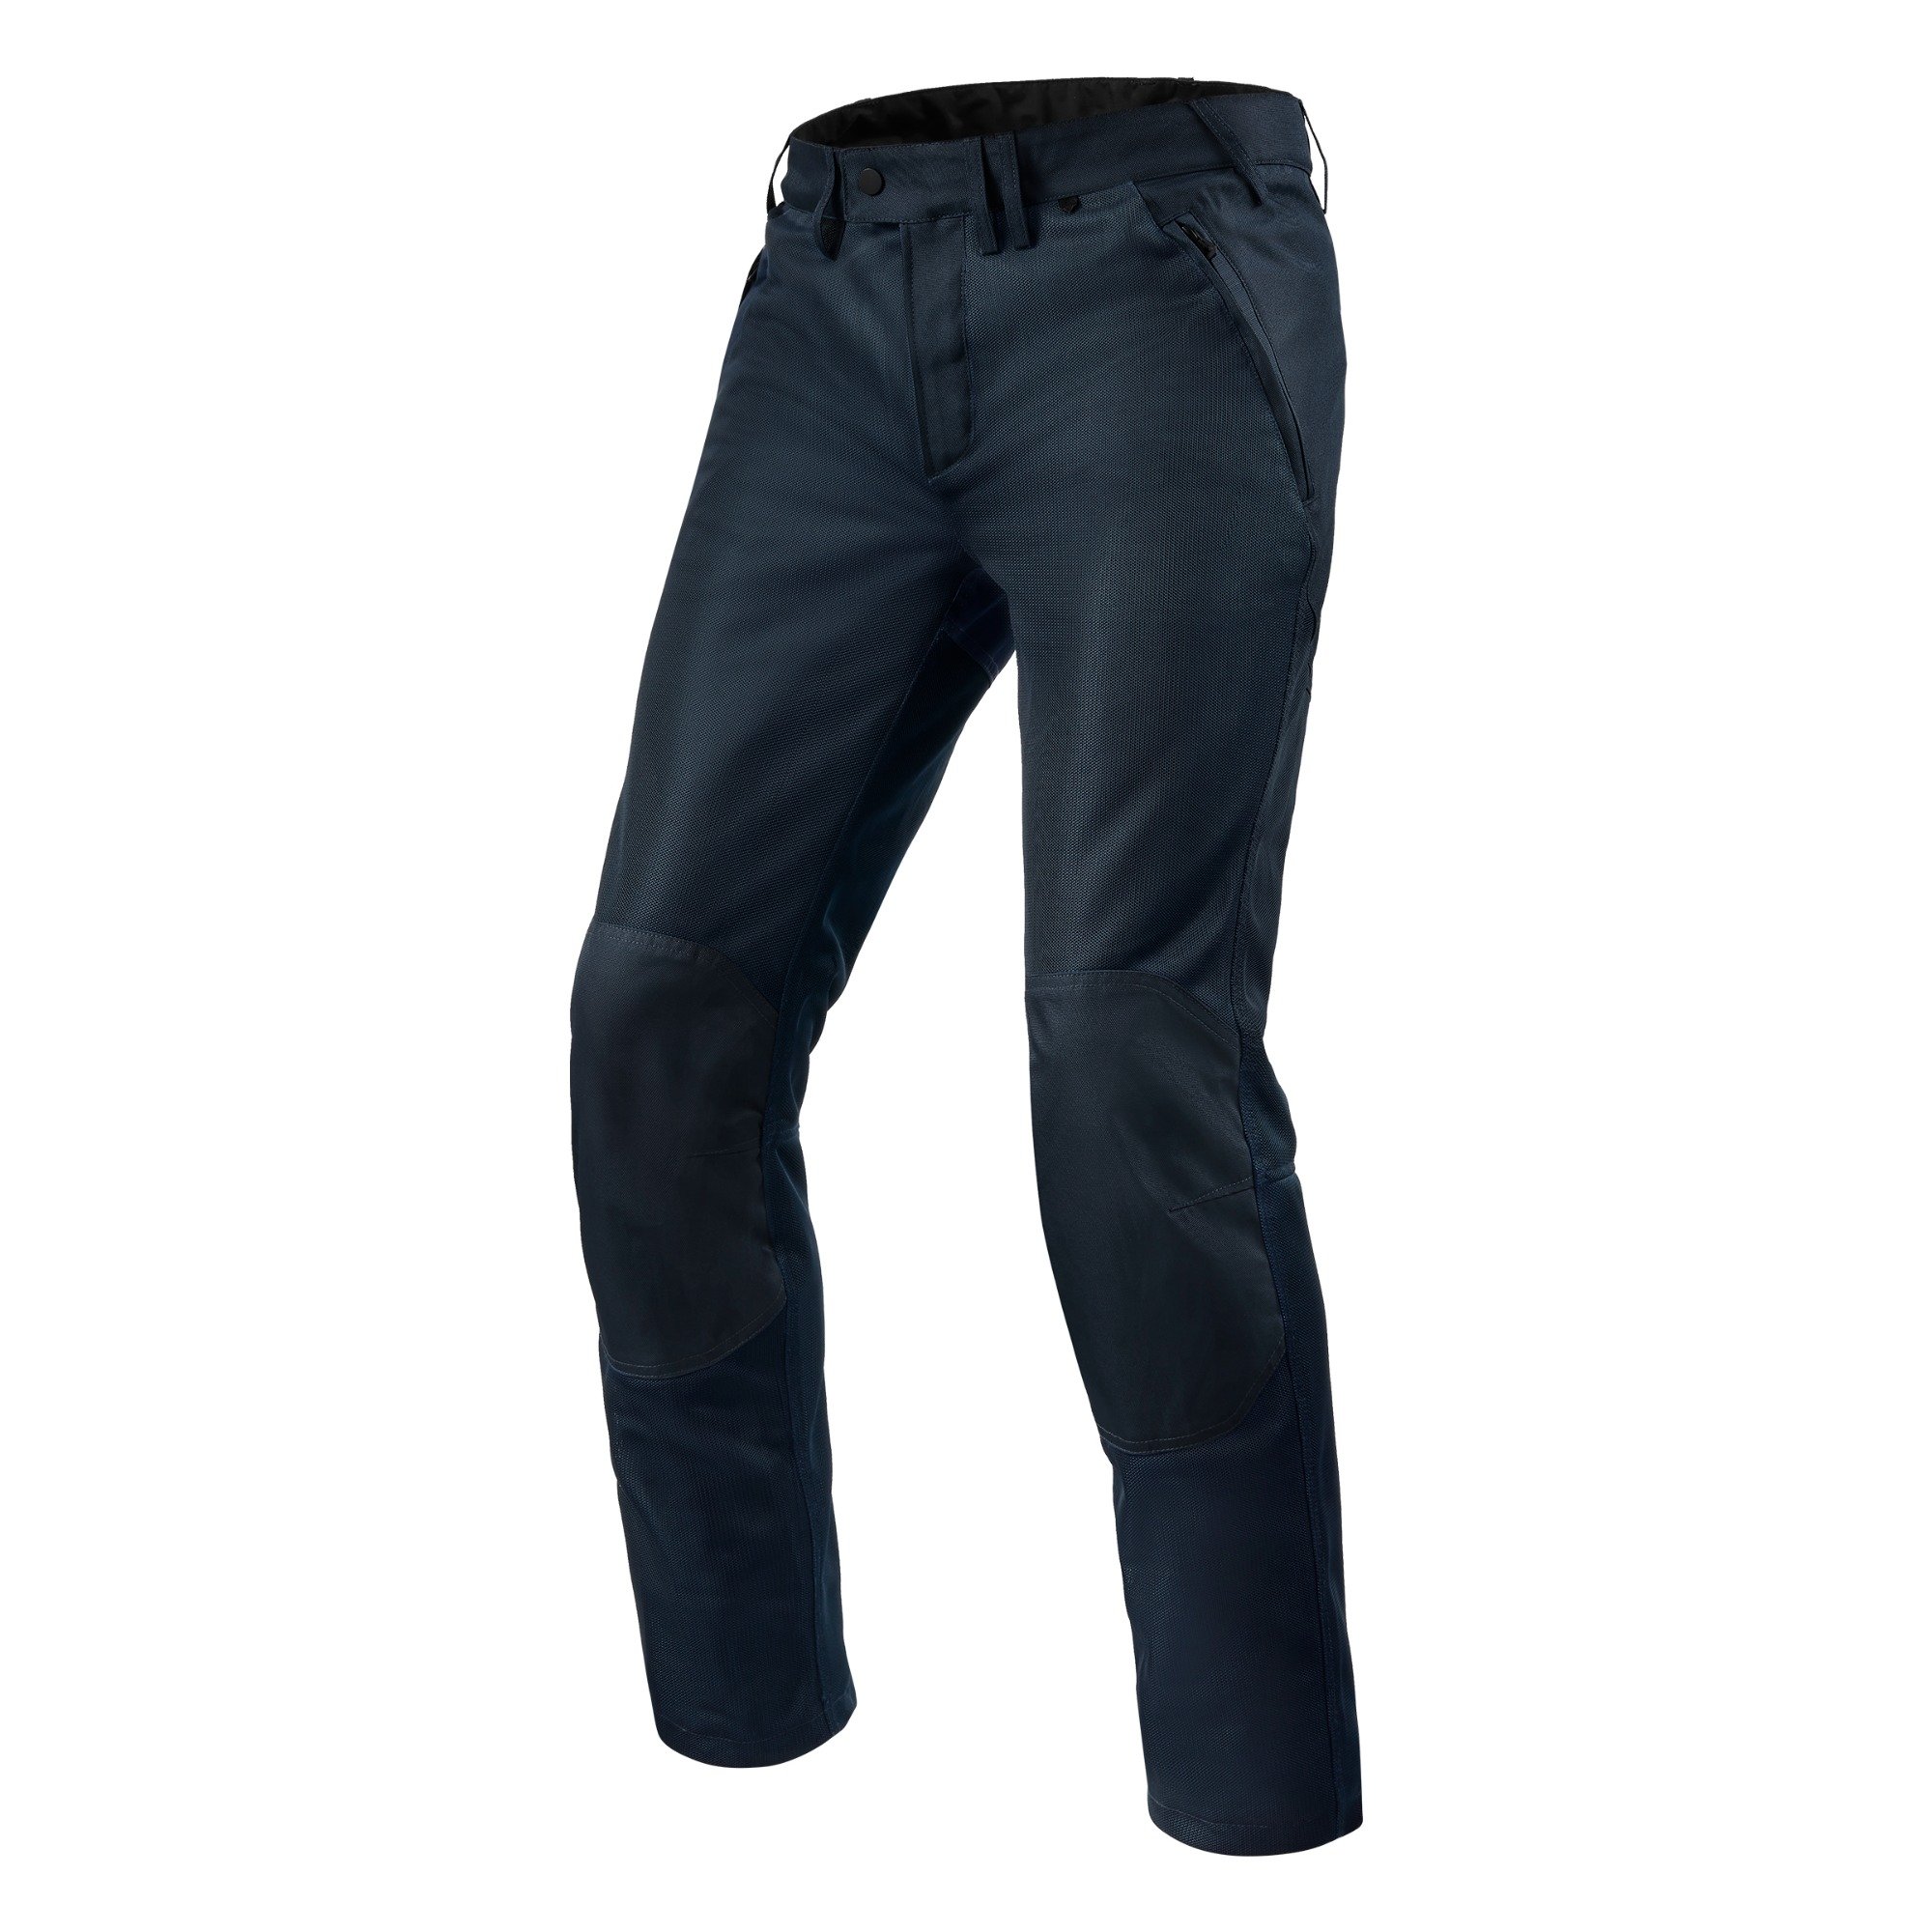 Image of REV'IT! Pants Eclipse 2 Dark Blue Standard Motorcycle Pants Size S ID 8700001368926